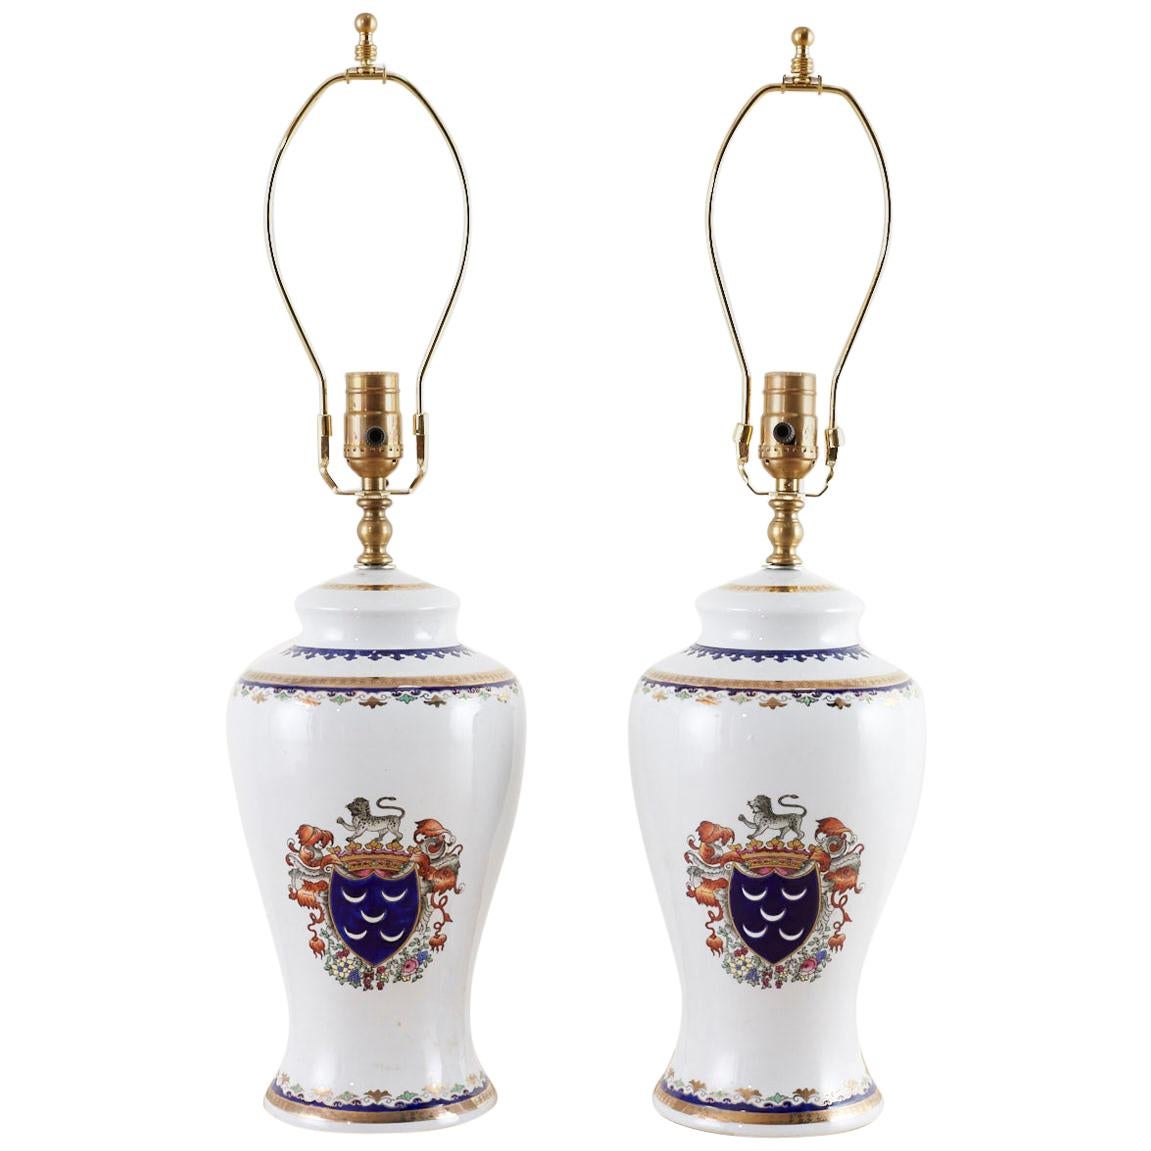 Pair of Royal Coat of Arms Porcelain Jar Table Lamps